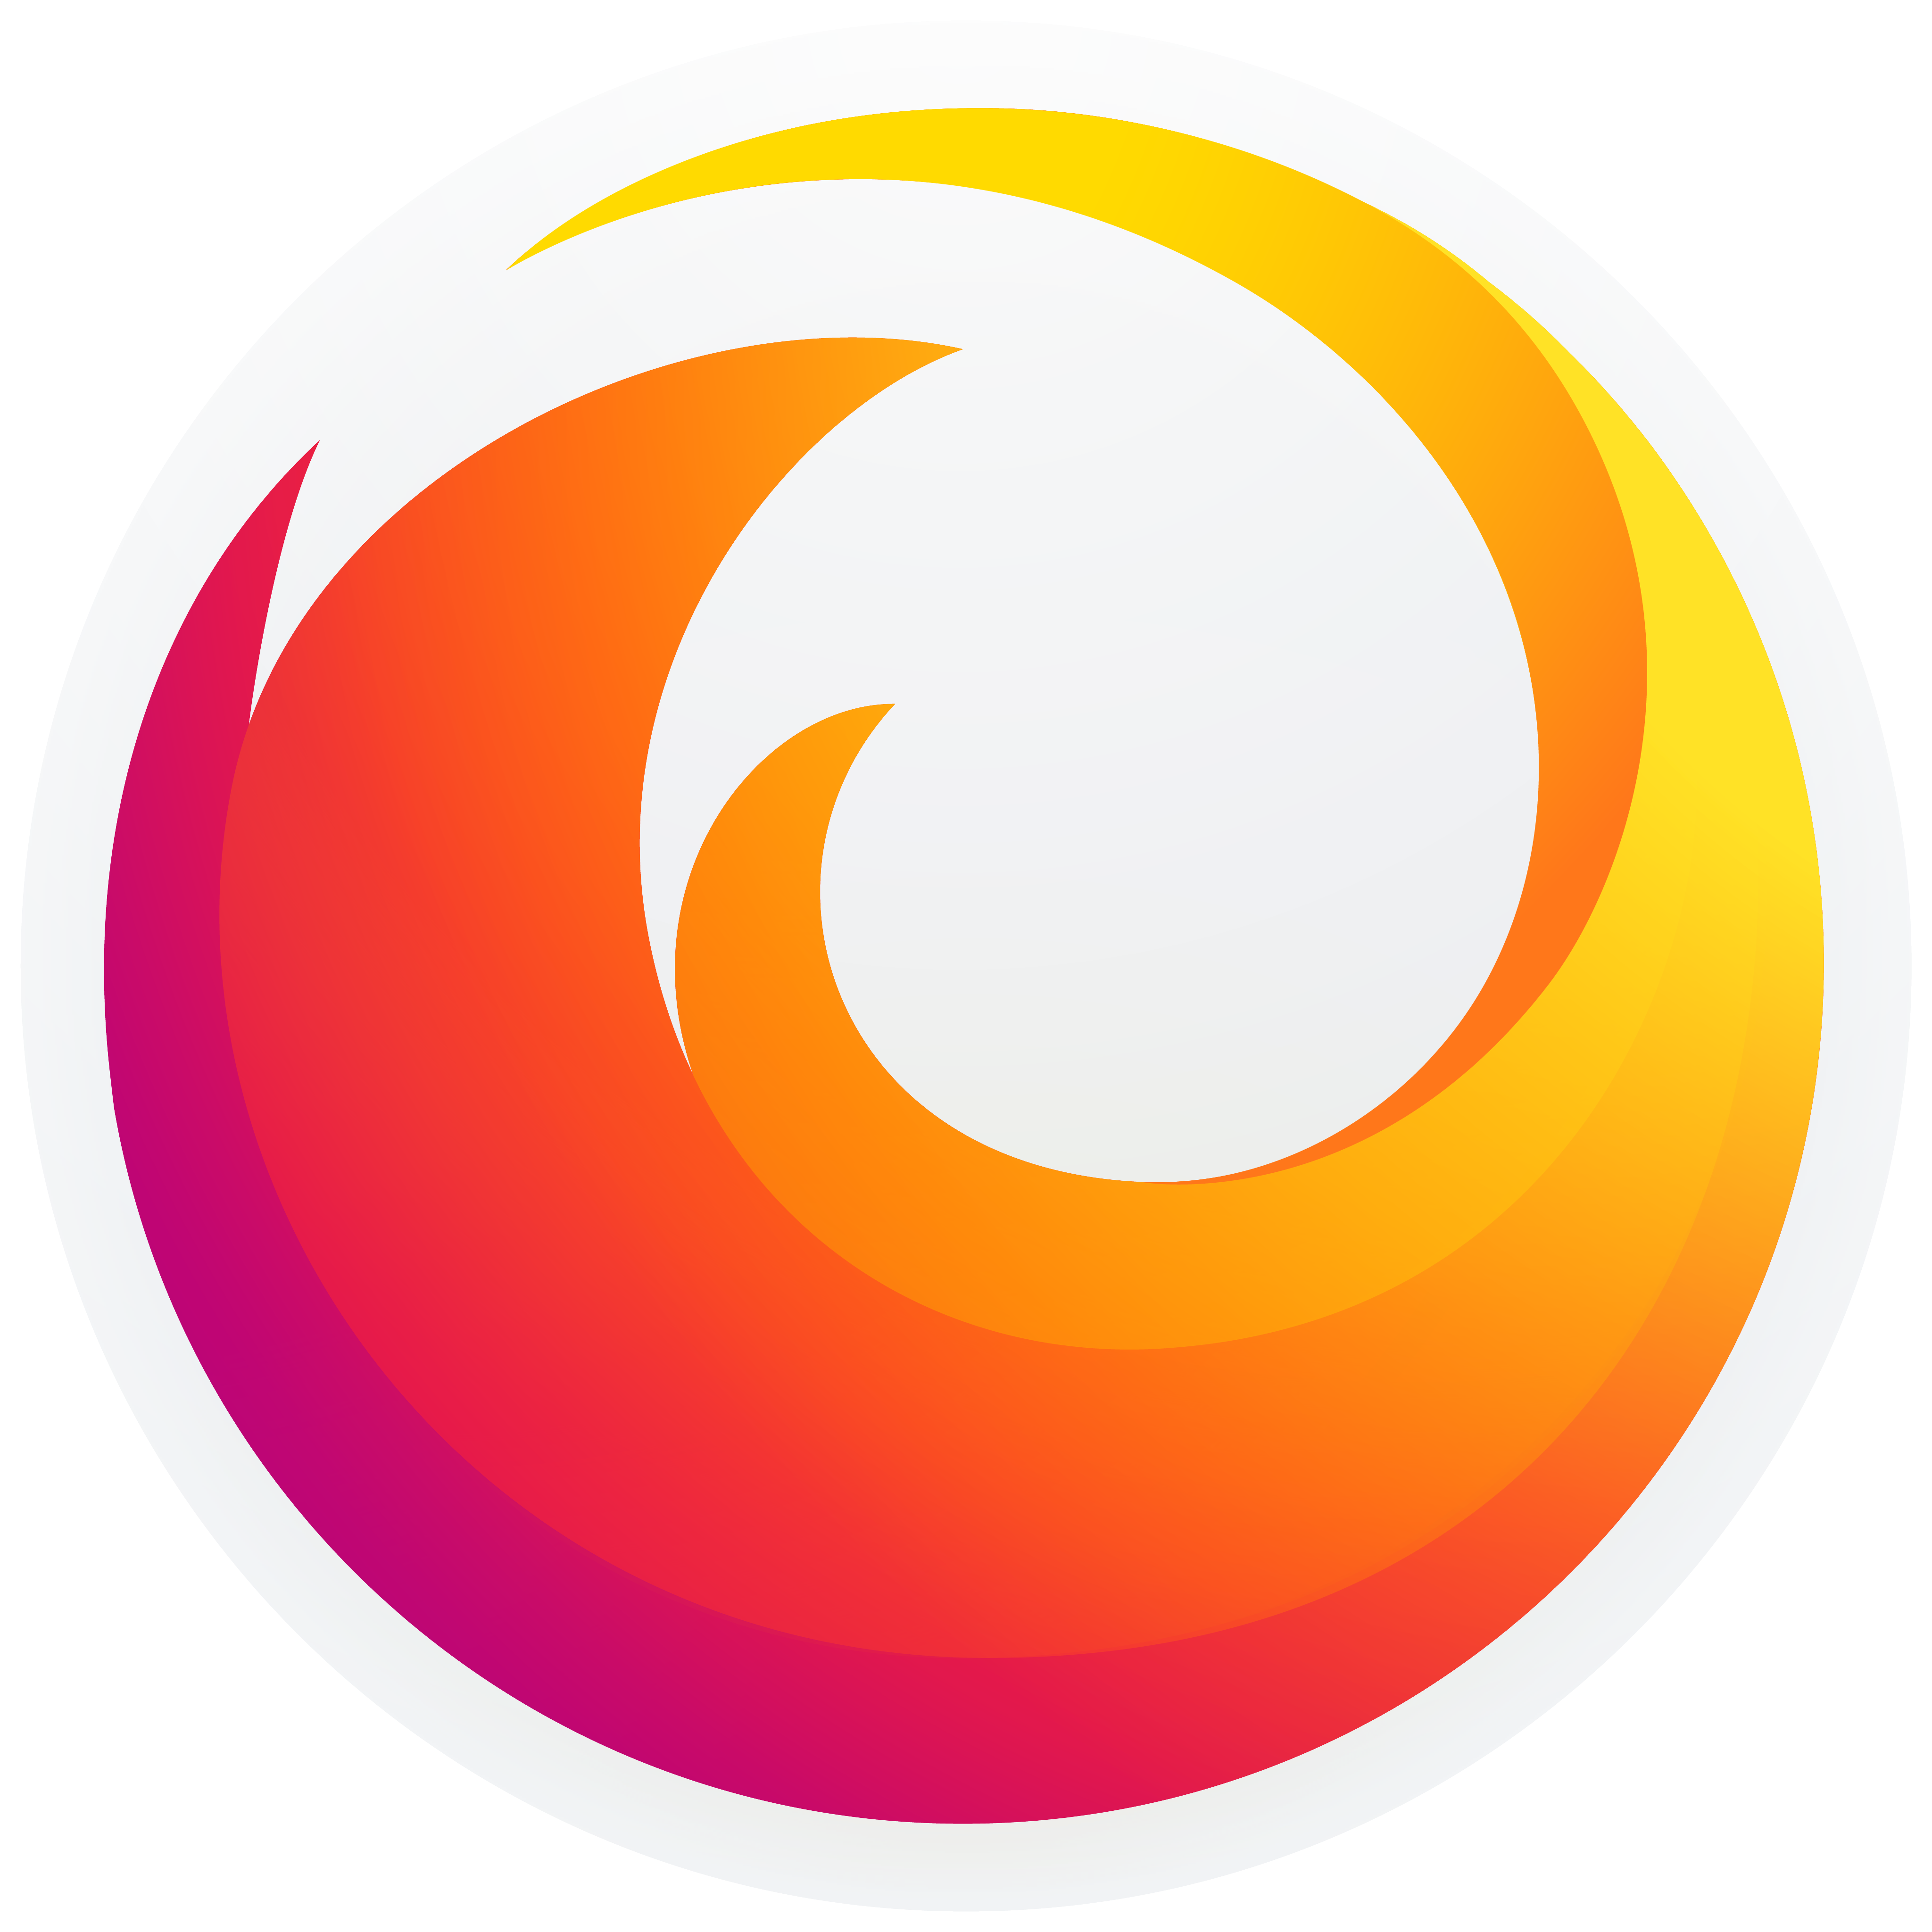 Ярлык firefox. Значок Firefox. Иконка Firefox PNG. Firefox браузер. Logo браузер Firefox.